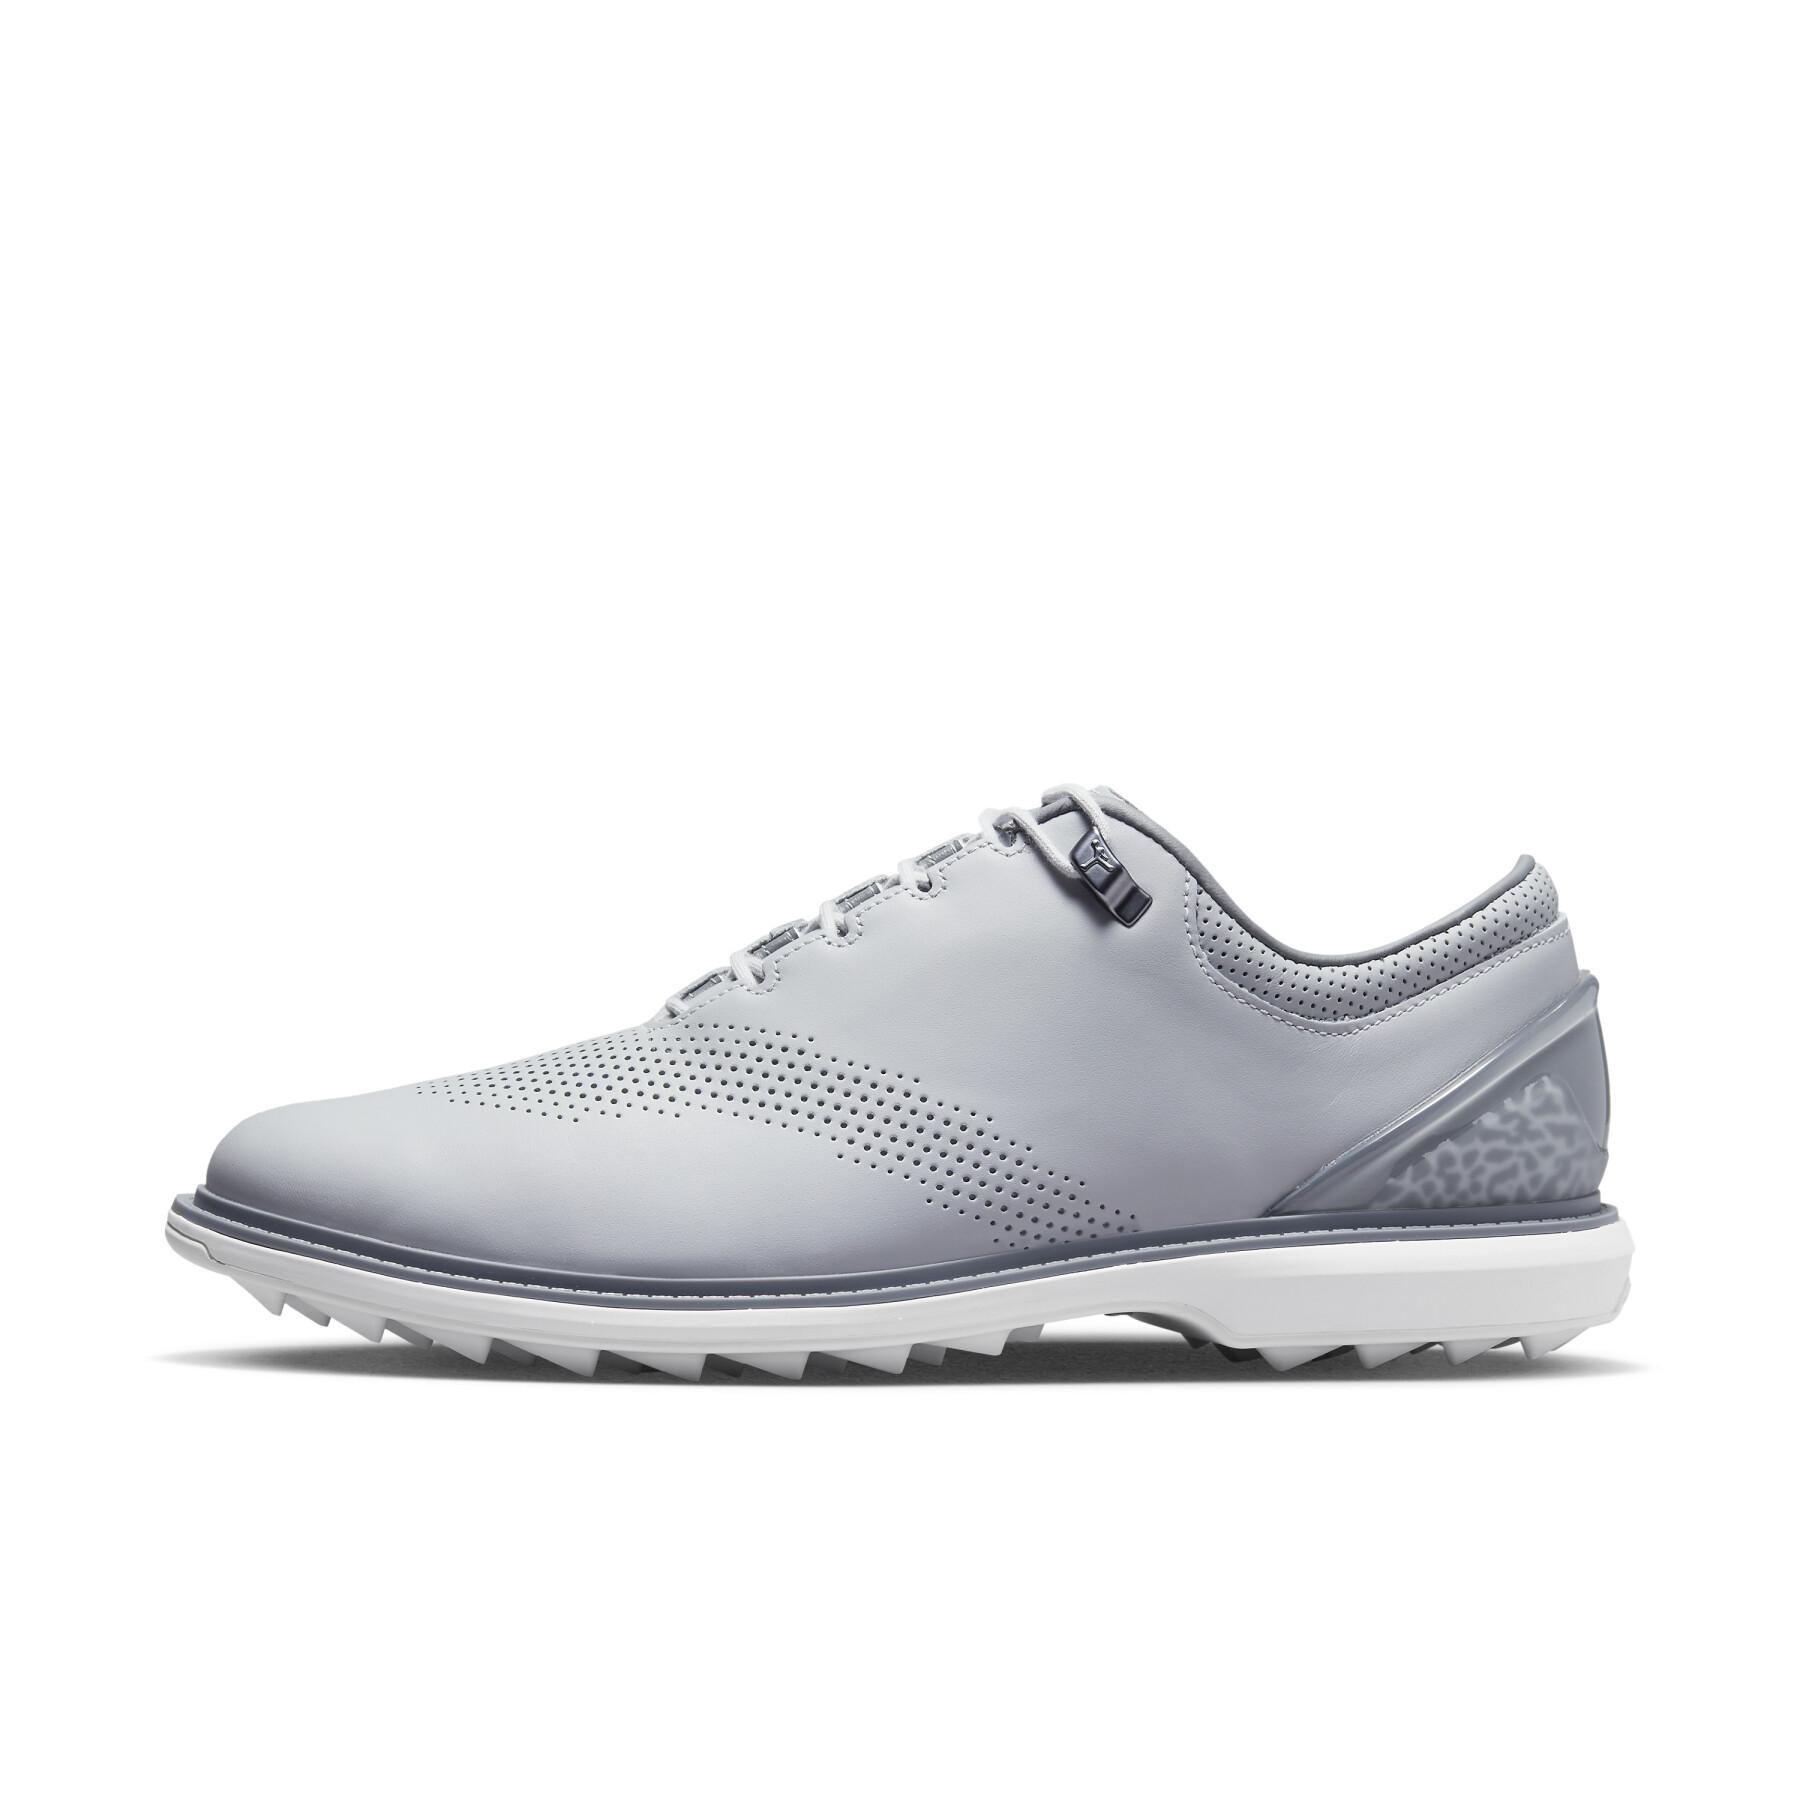 Golf shoes Nike Jordan ADG 4